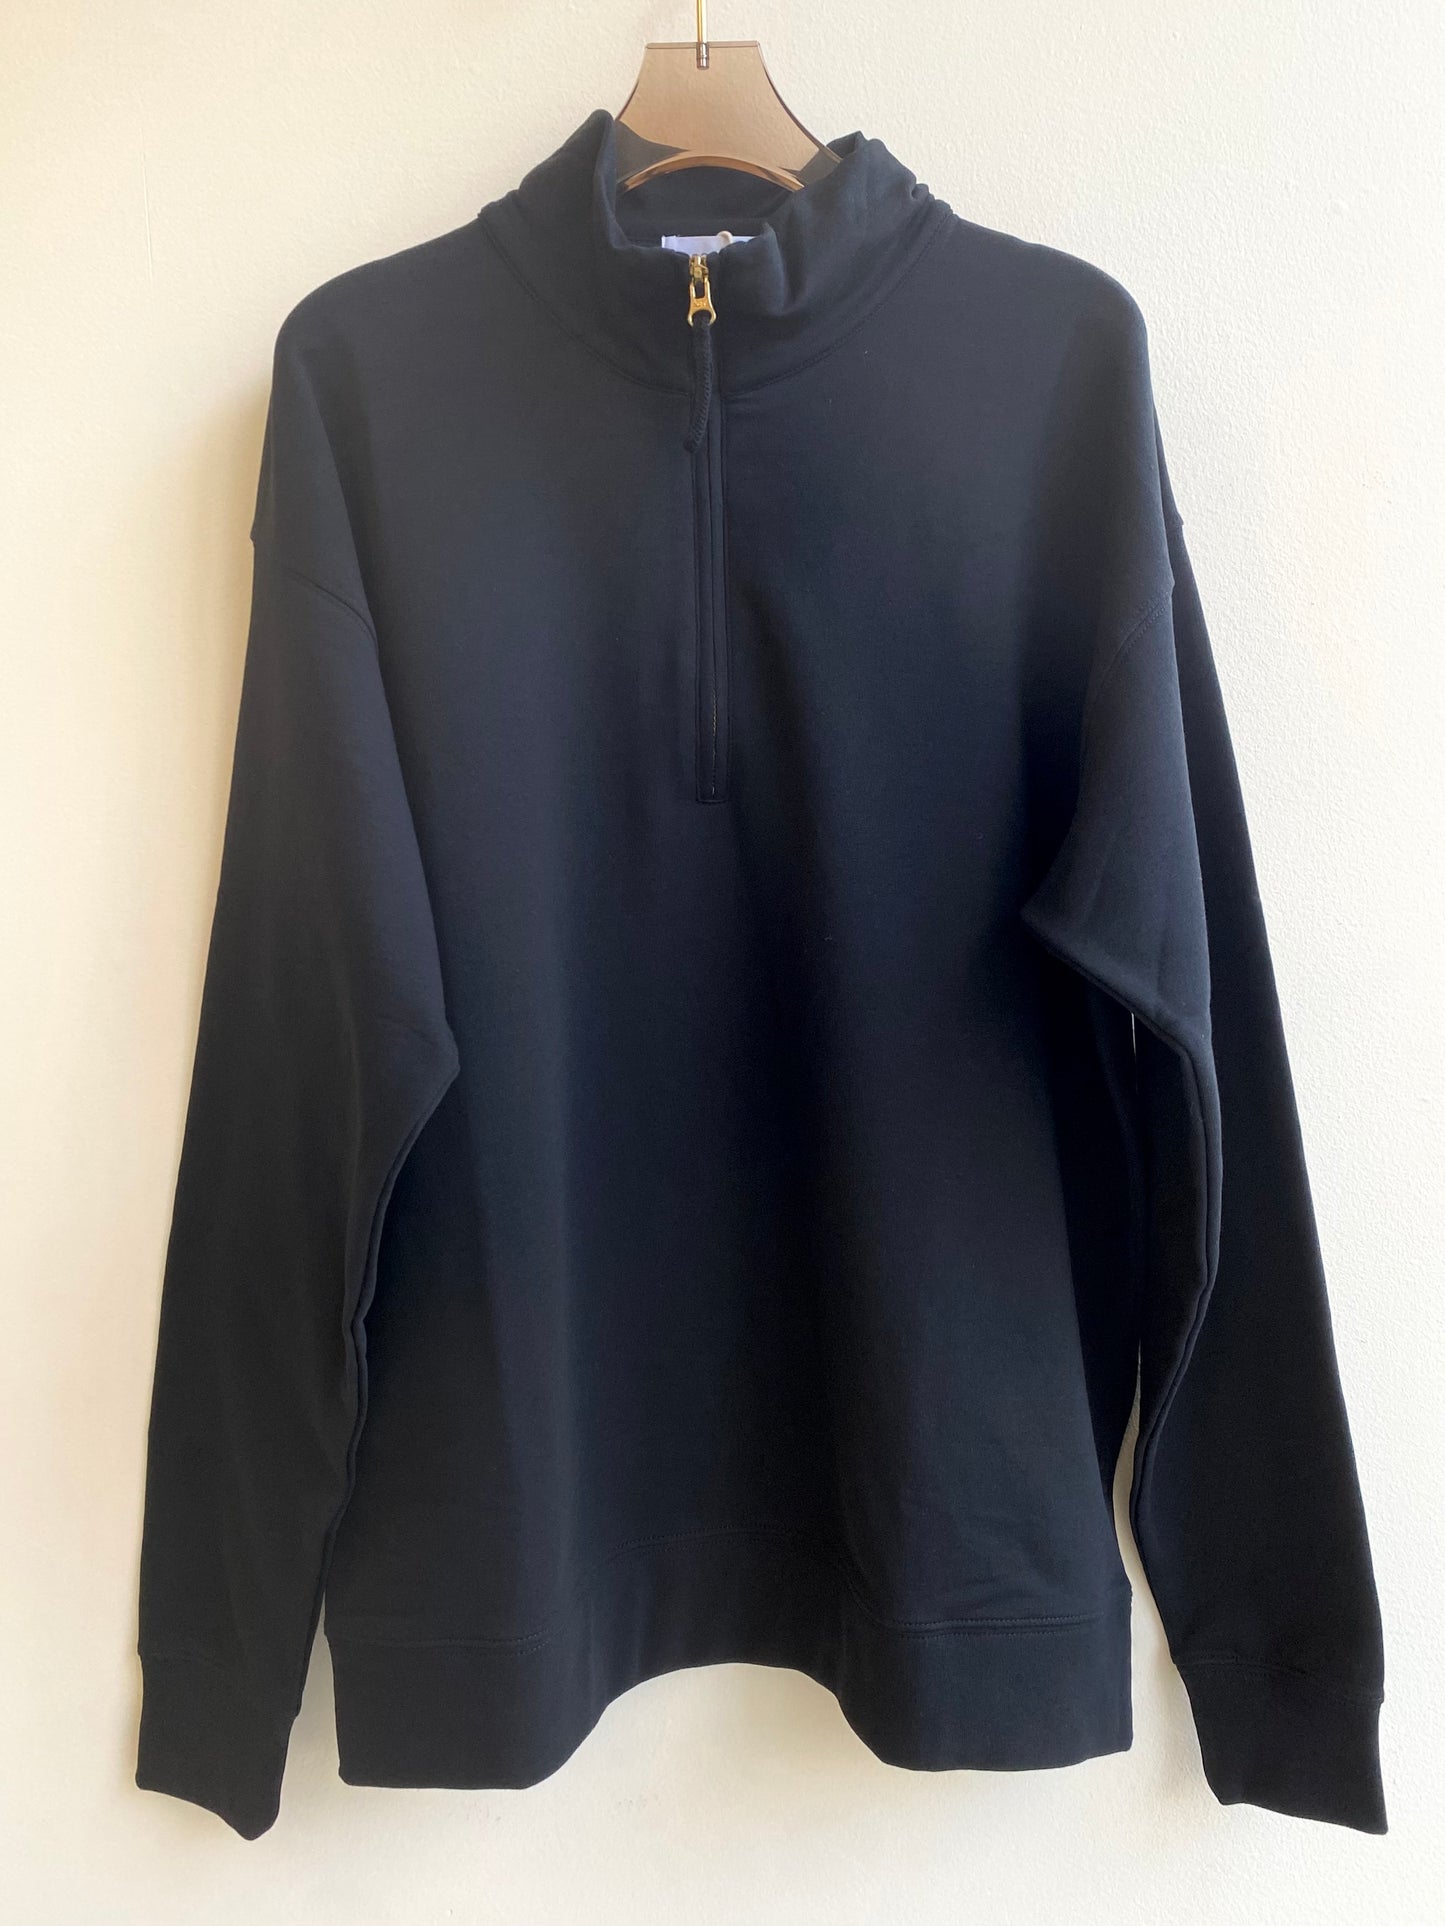 Sweatshirt Zipper Jacket (Black)